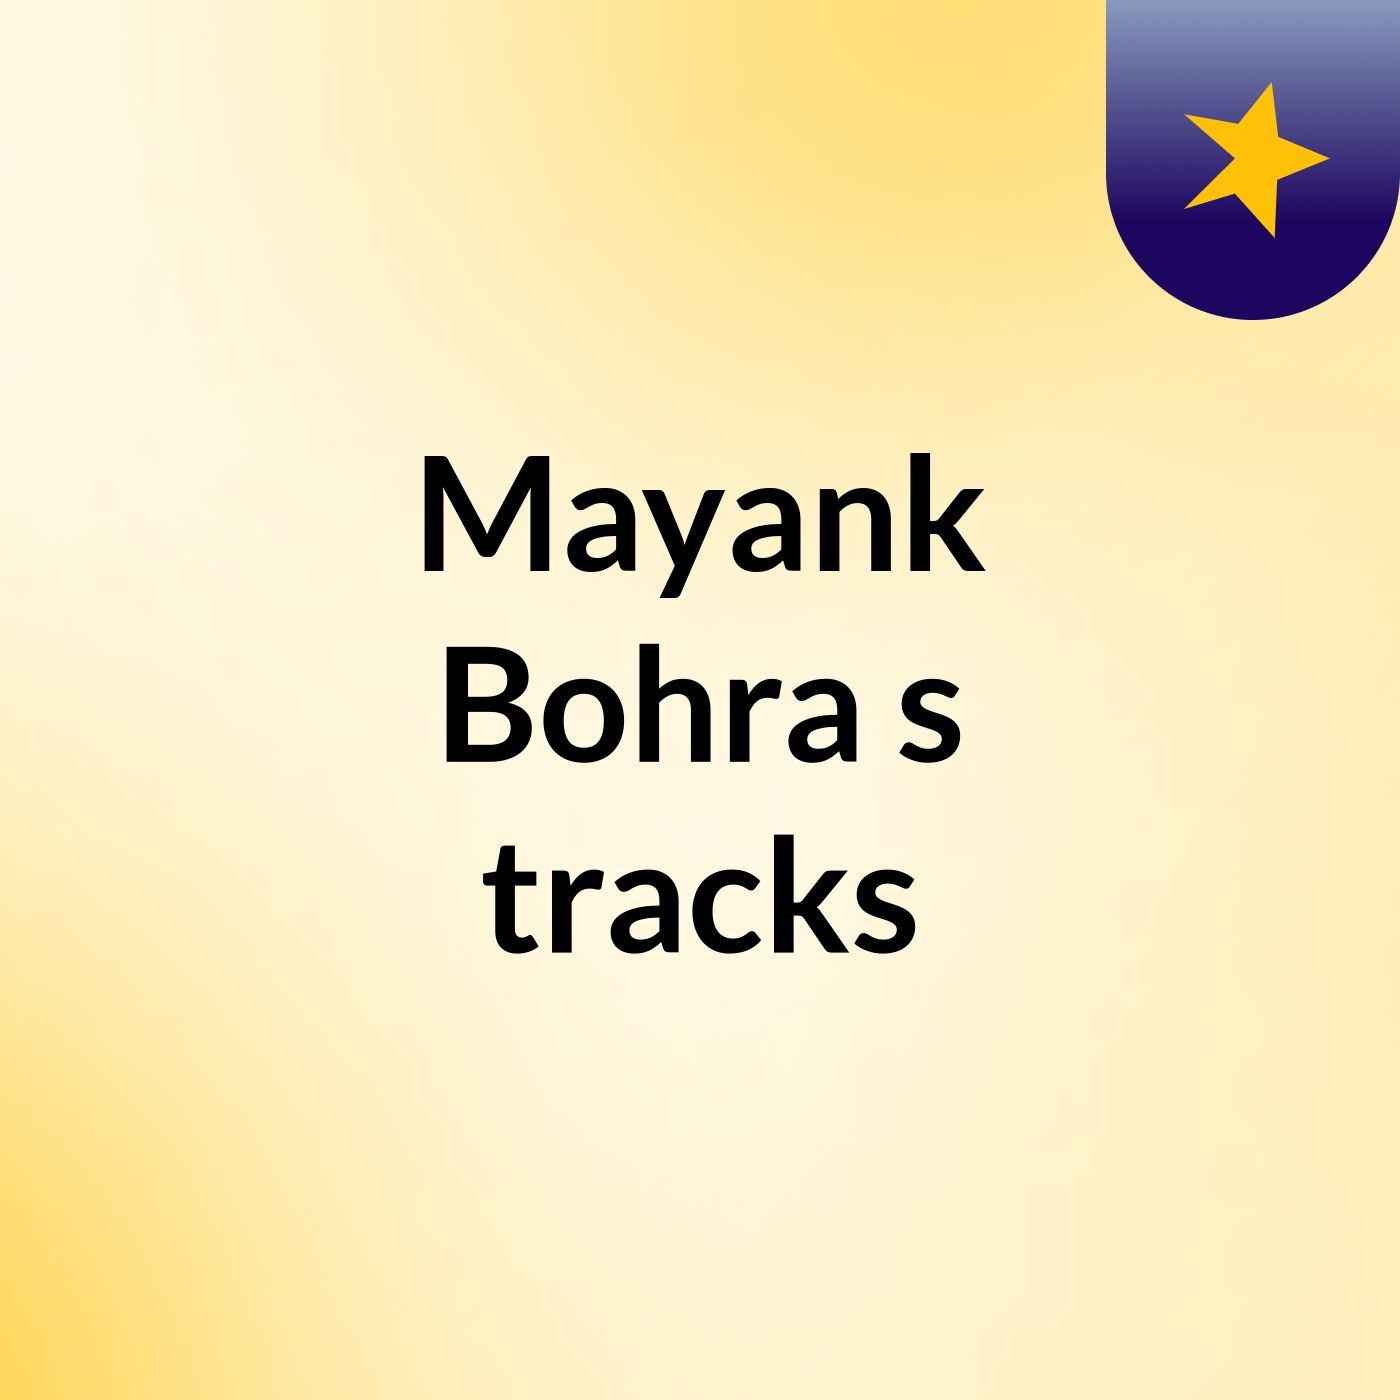 Mayank Bohra's tracks